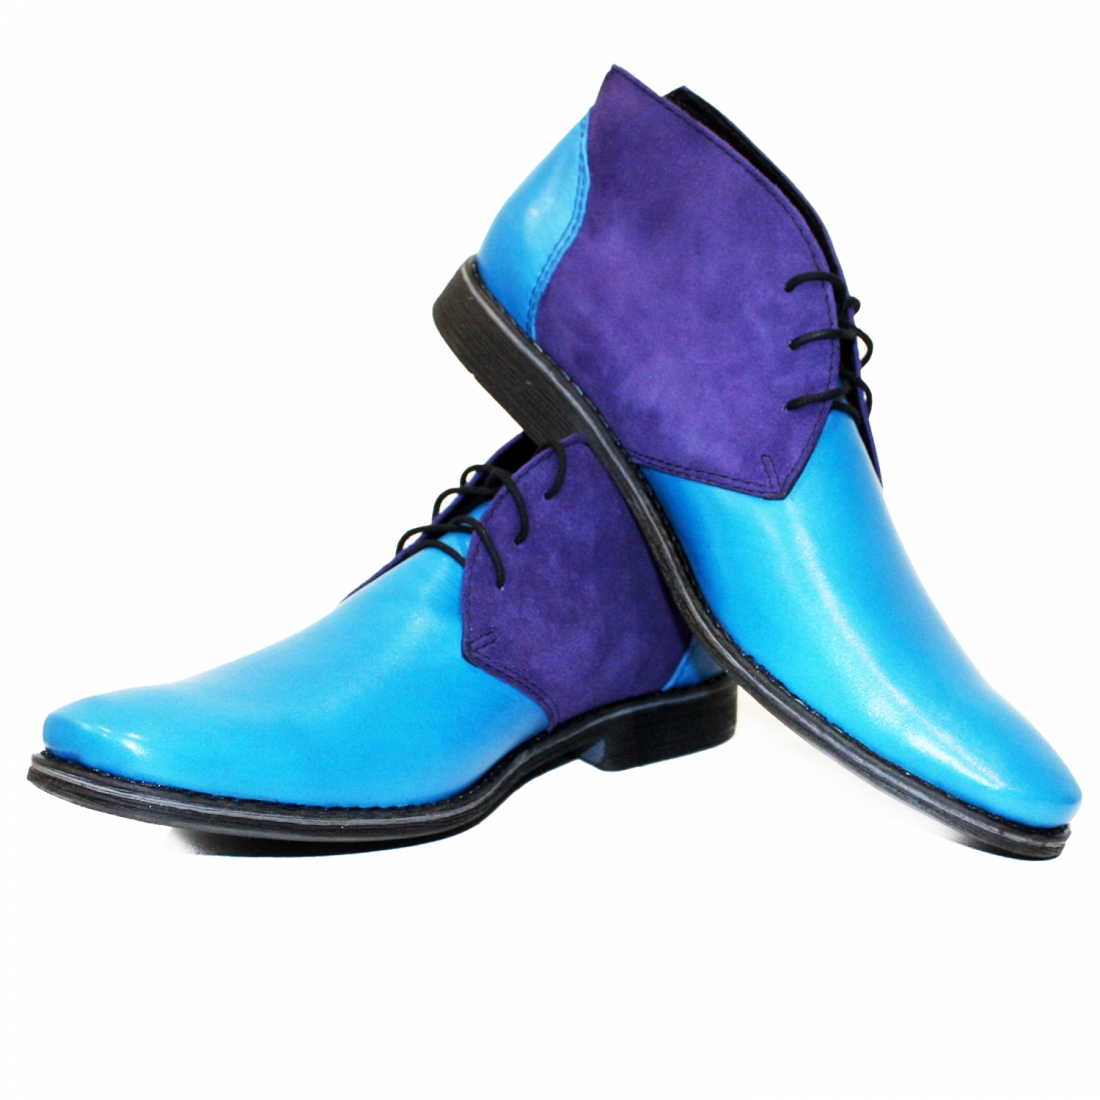 Modello Freddero - Buty Chukka - Handmade Colorful Italian Leather Shoes